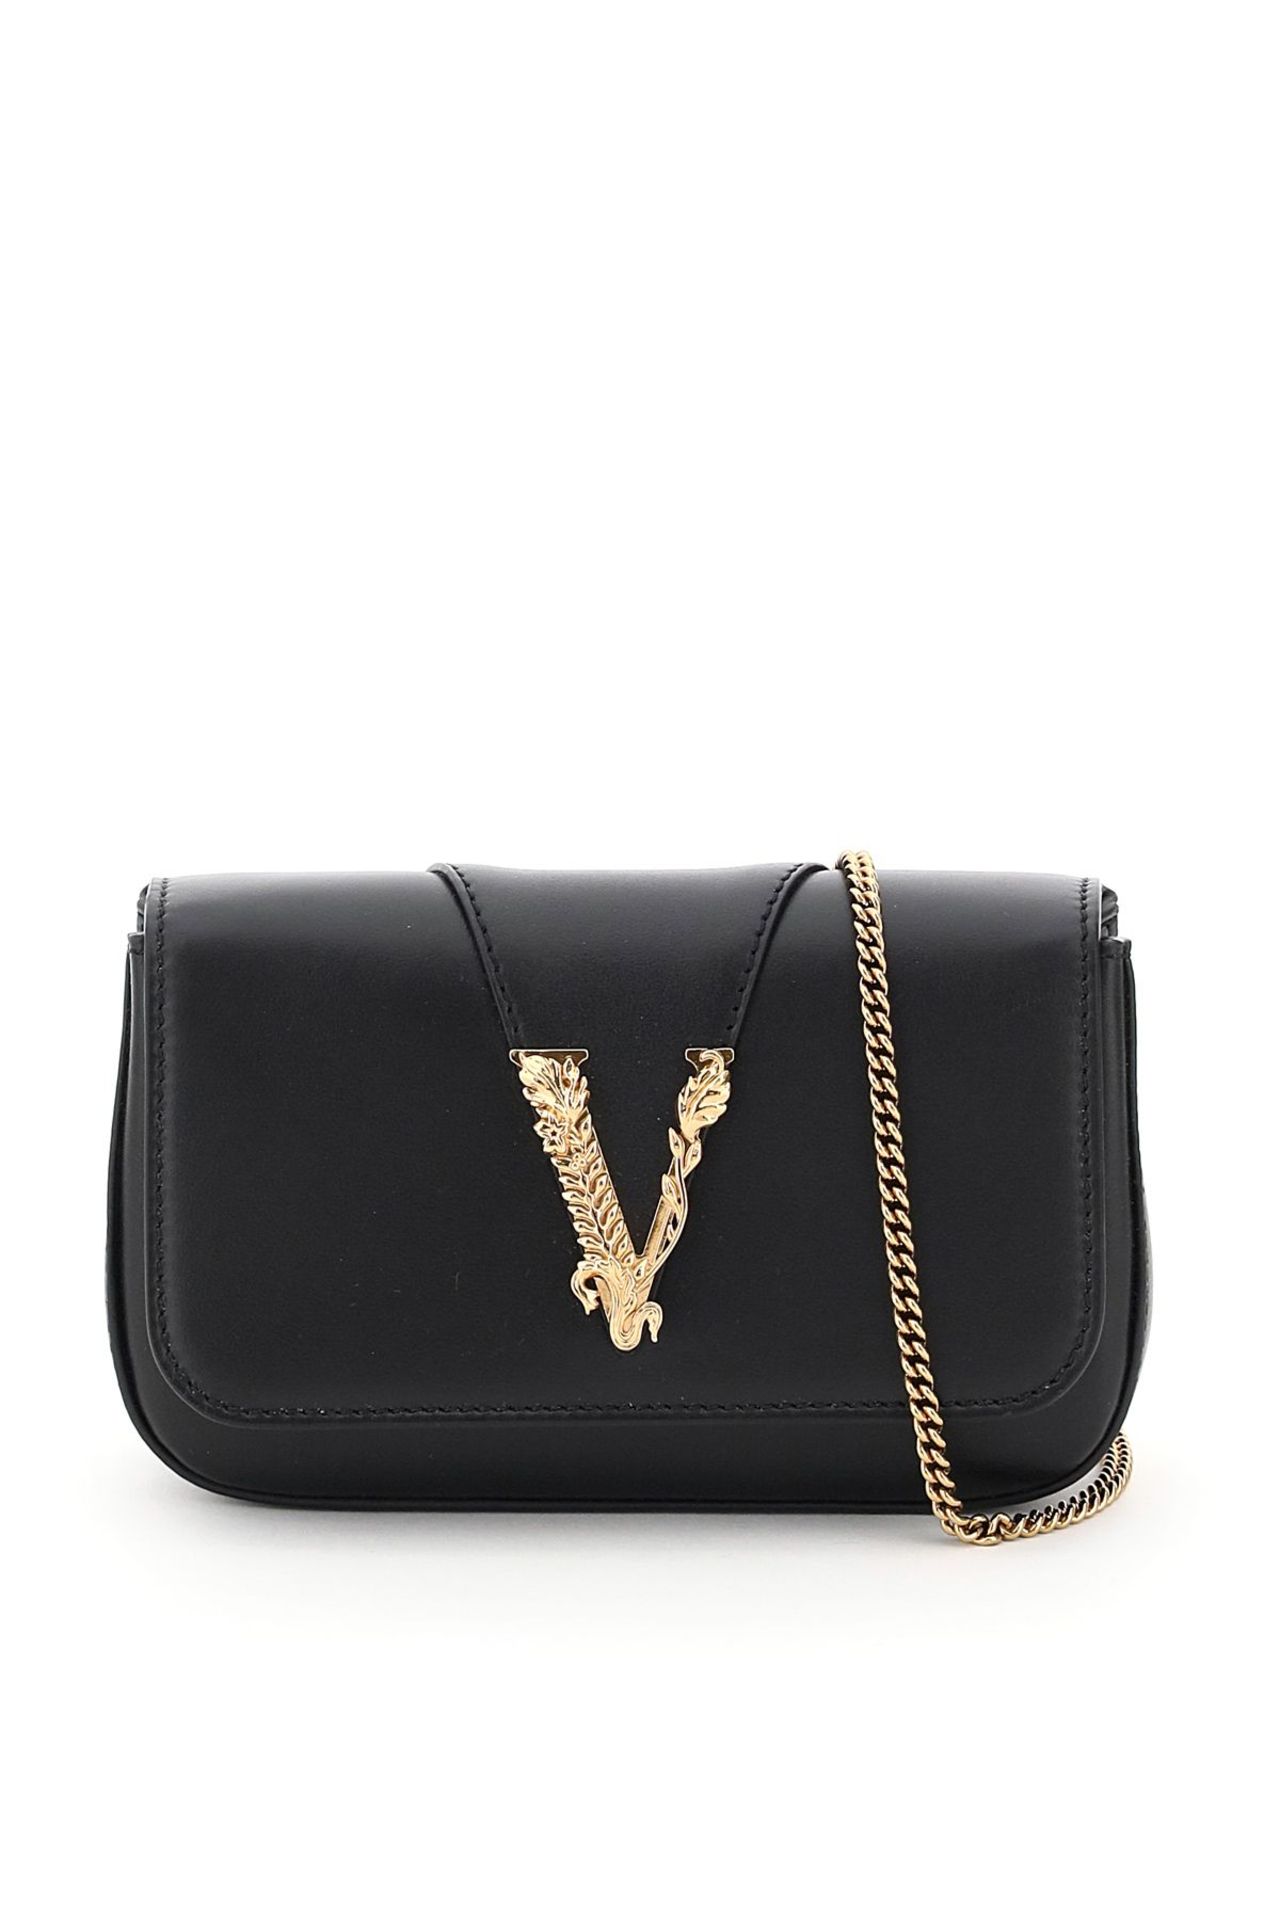 VERSACE VIRTUS MINI BAG VERSACE Black. RRP £560.00. Virtus leather mini bag by Versace, decorated